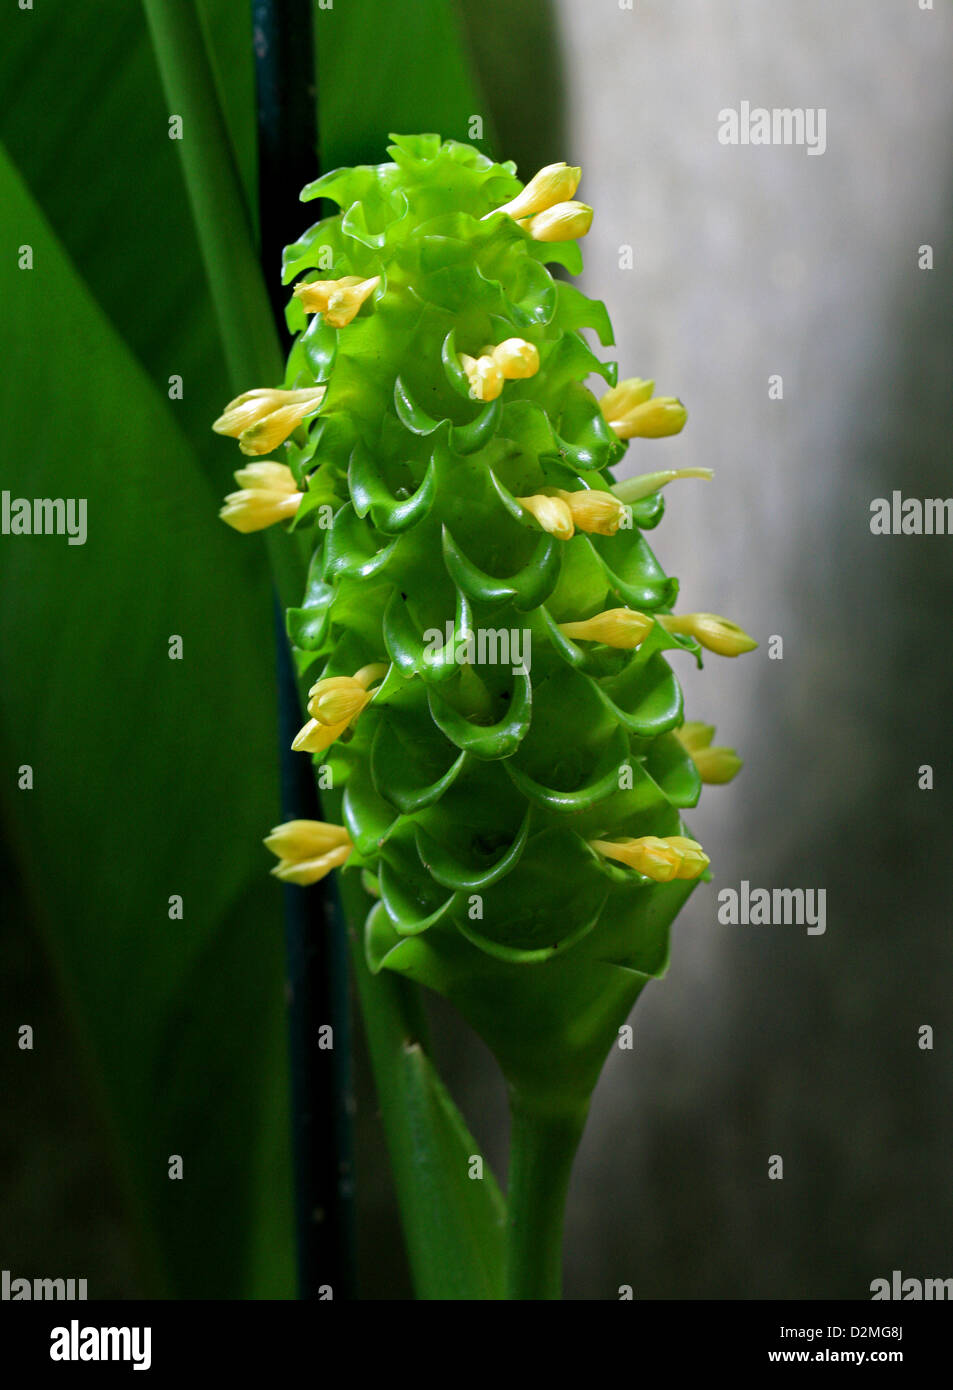 Green Ice or Green Ice Calathea, Calathea cylindrica, Marantaceae. Brazil, South America. Stock Photo